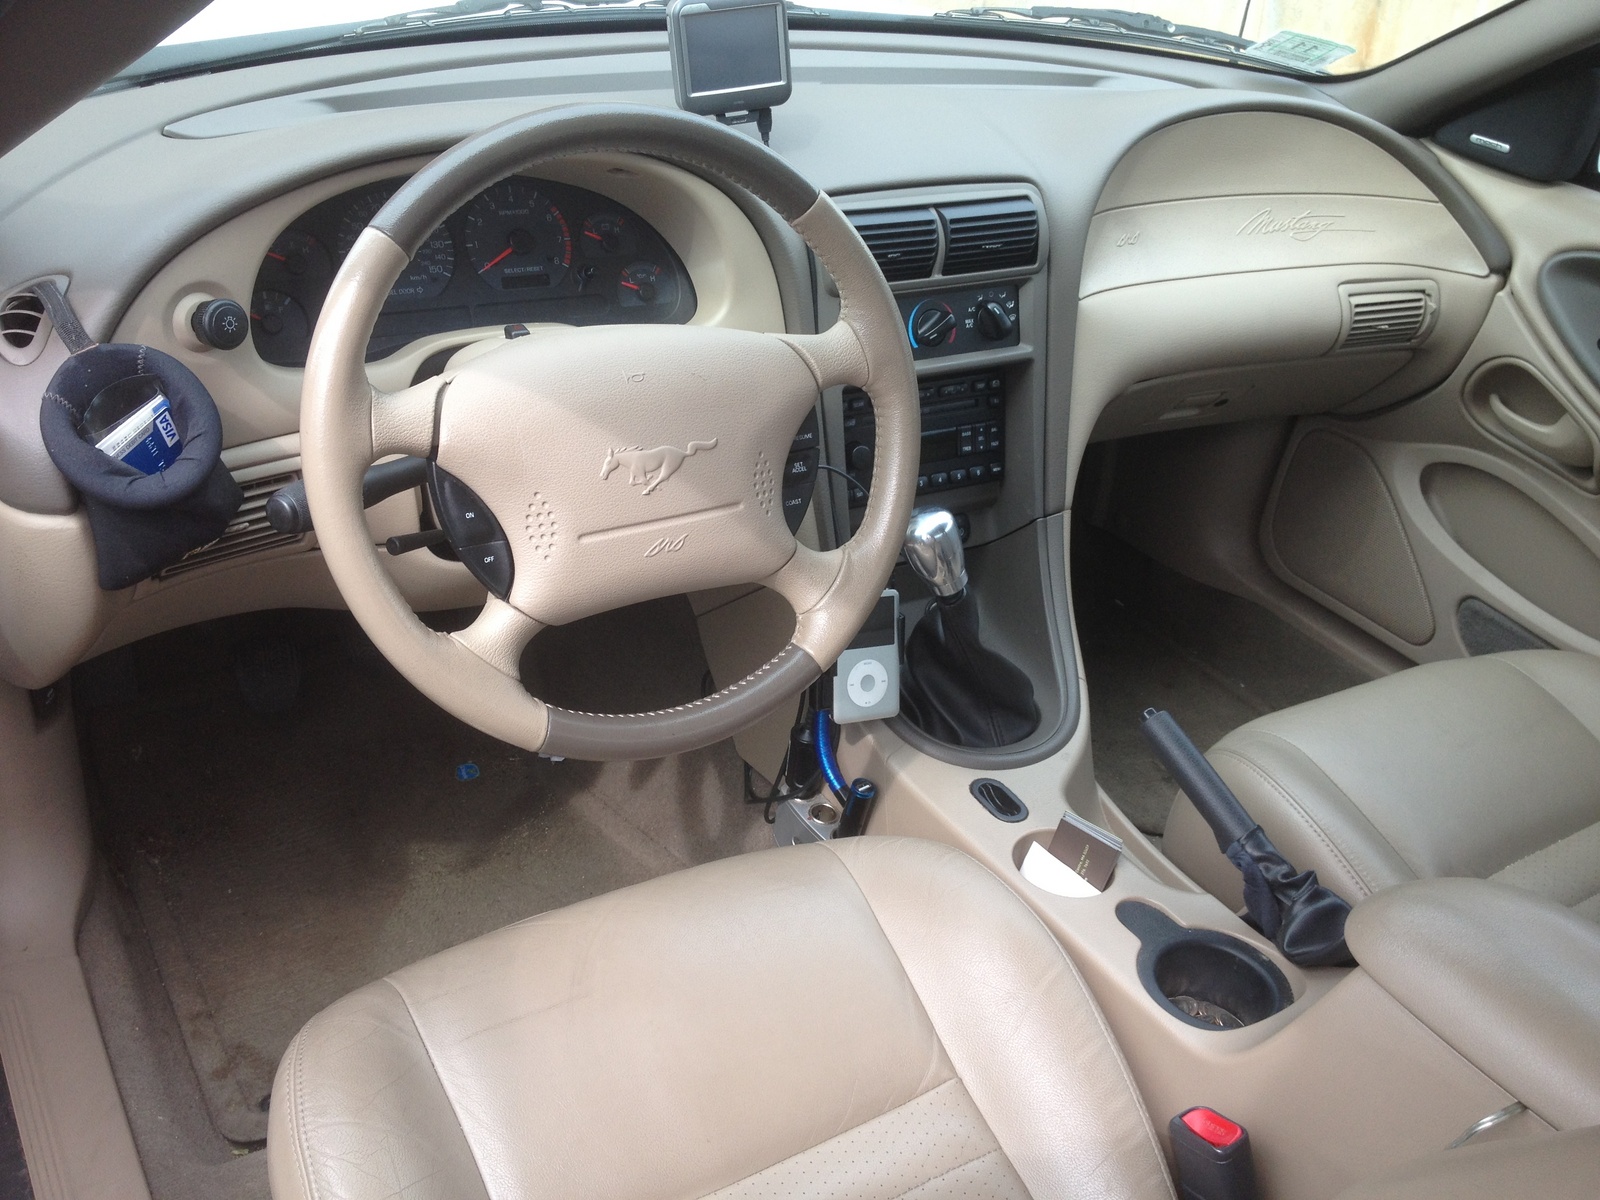 2004 Ford mustang gt interior